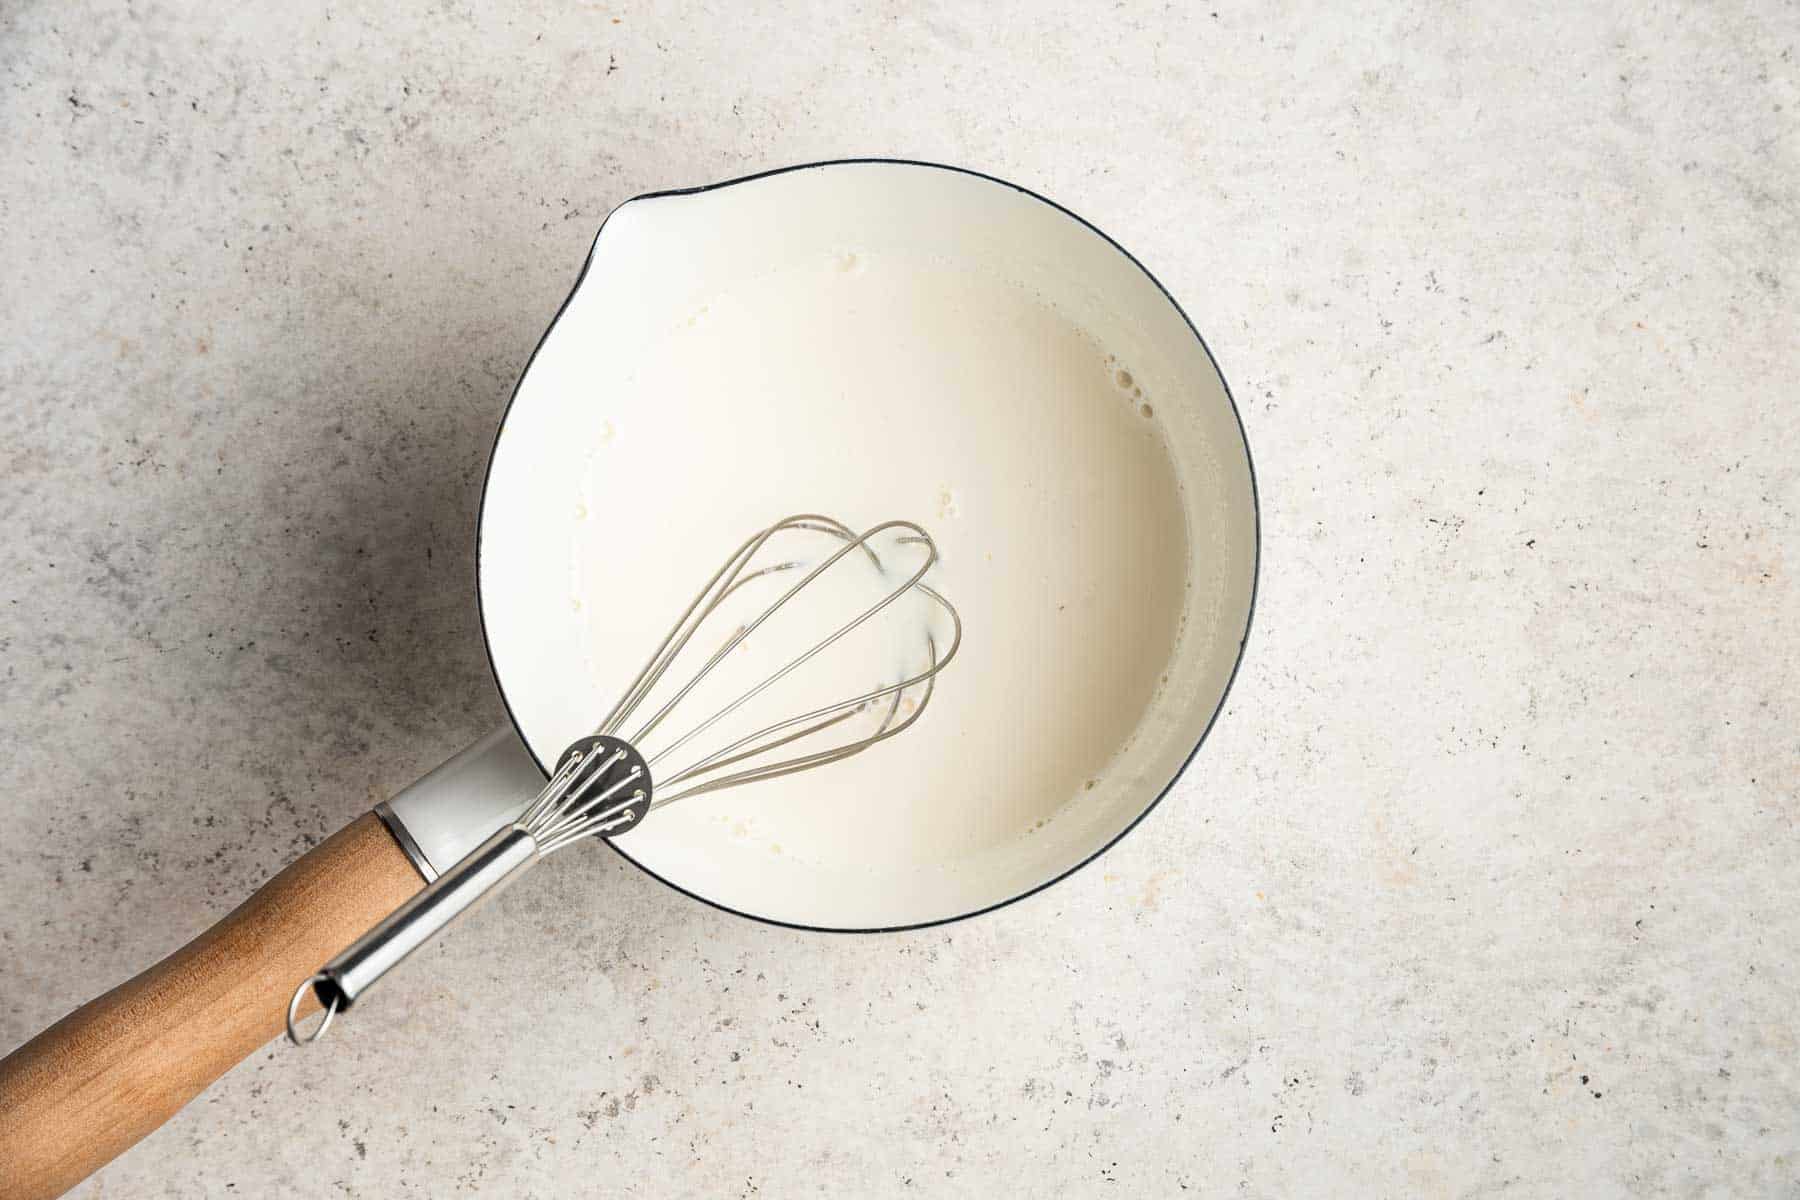 Whisking panna cotta mixture in a white sauce pan.